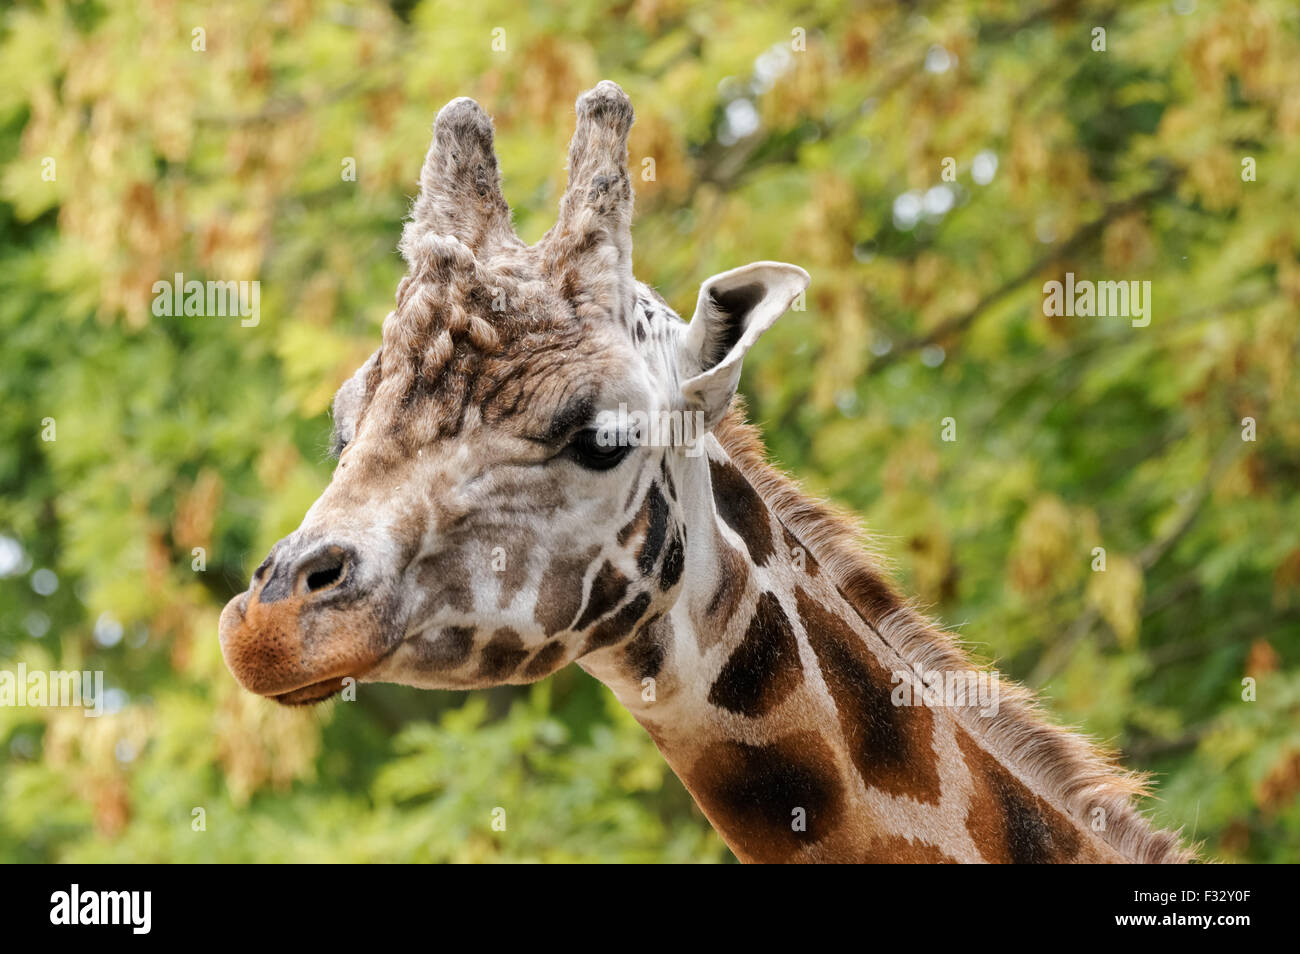 close up portrait of Rothschild's giraffe Stock Photo